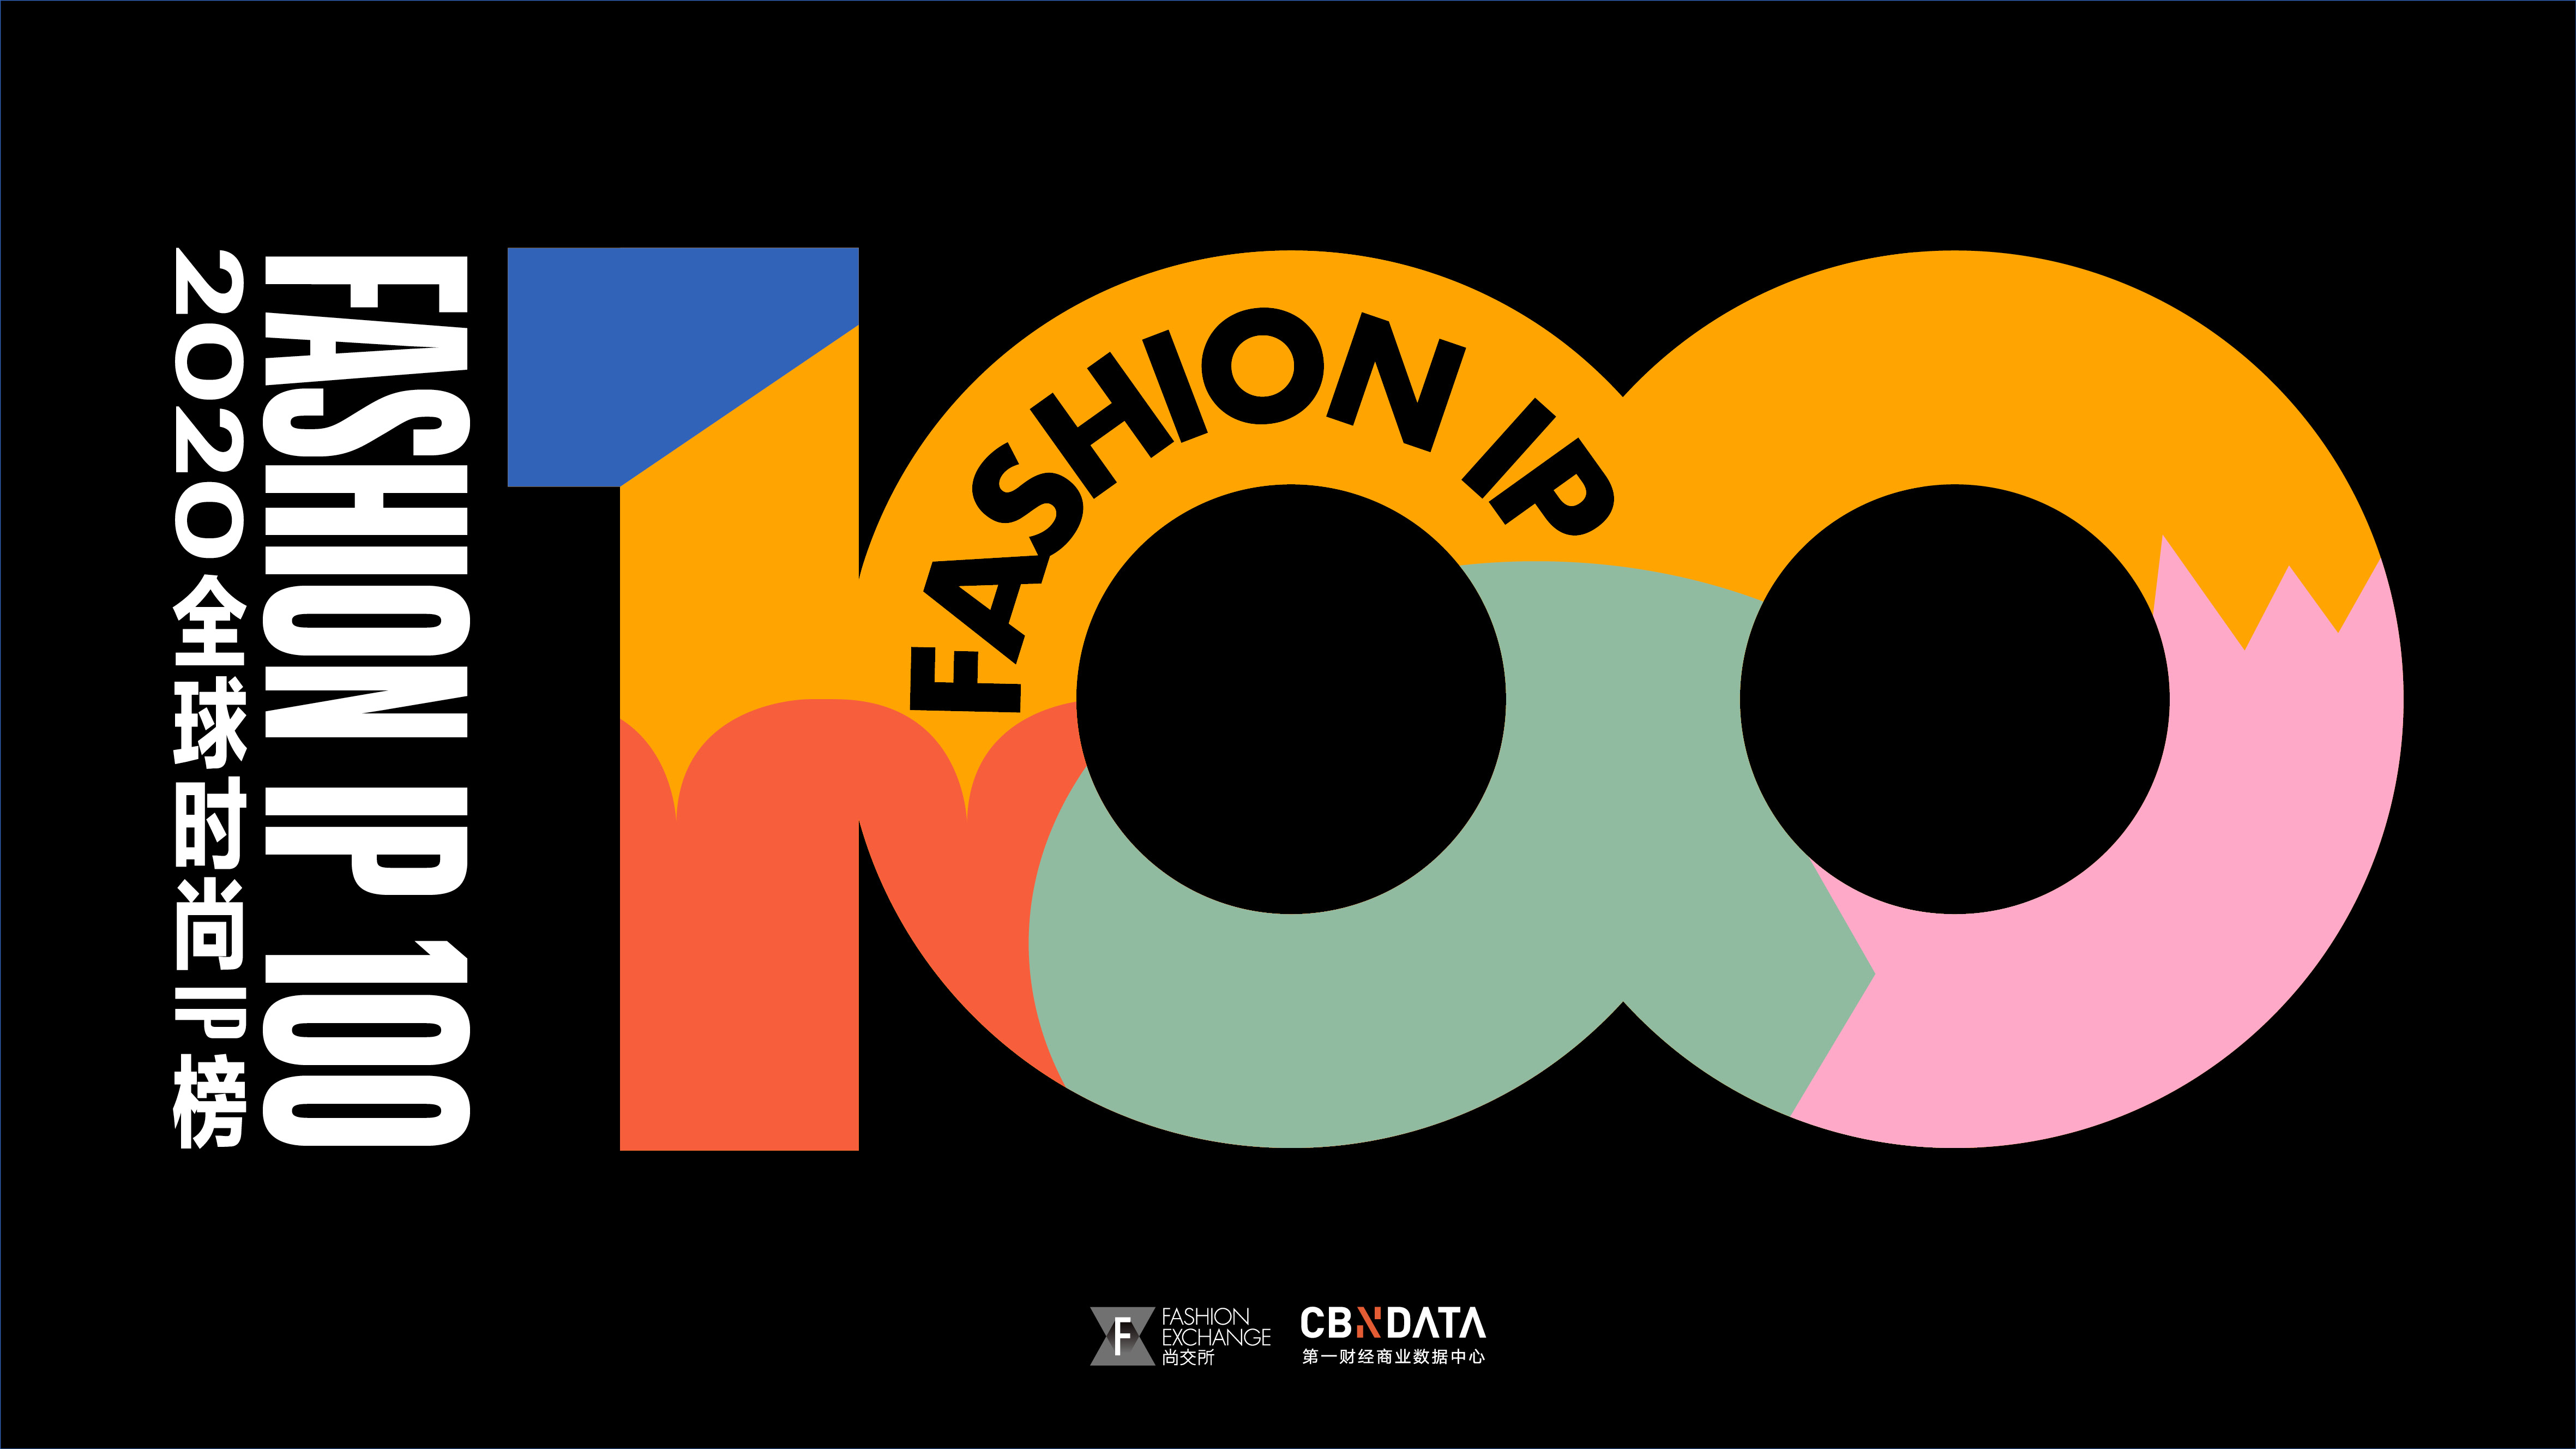 2020全球时尚IP榜《Fashion IP 100》与《2020全球时尚IP白皮书》发布